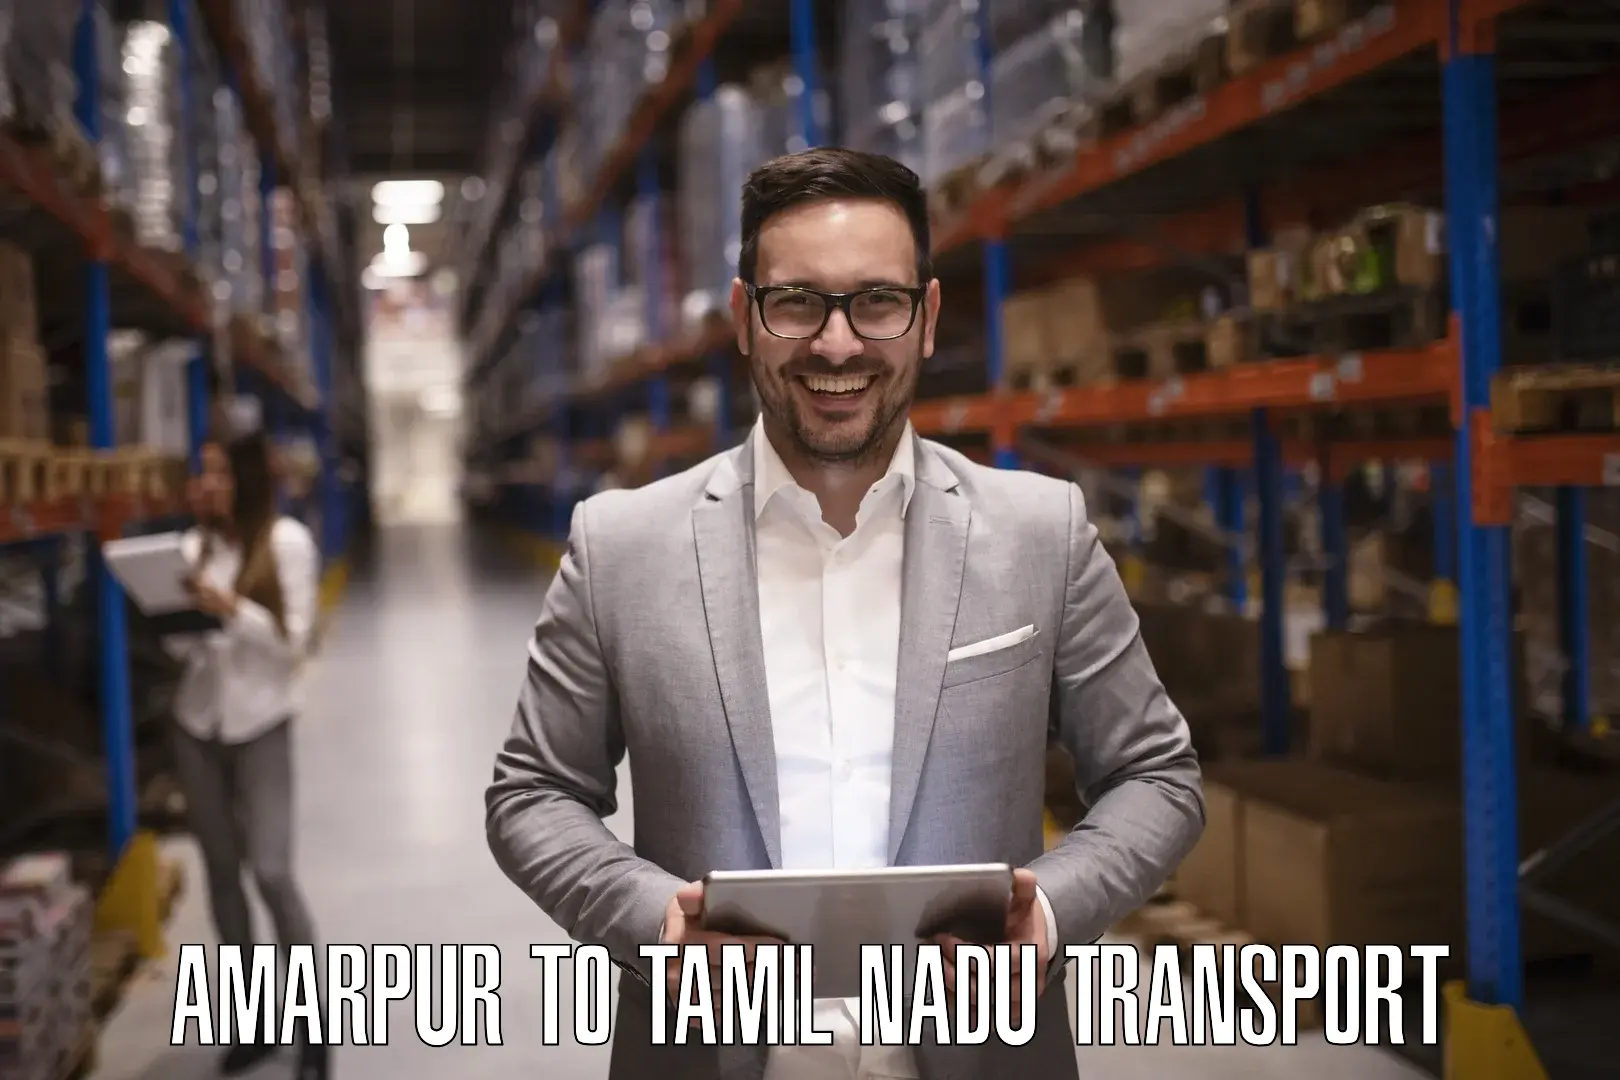 Online transport booking Amarpur to Tamil Nadu